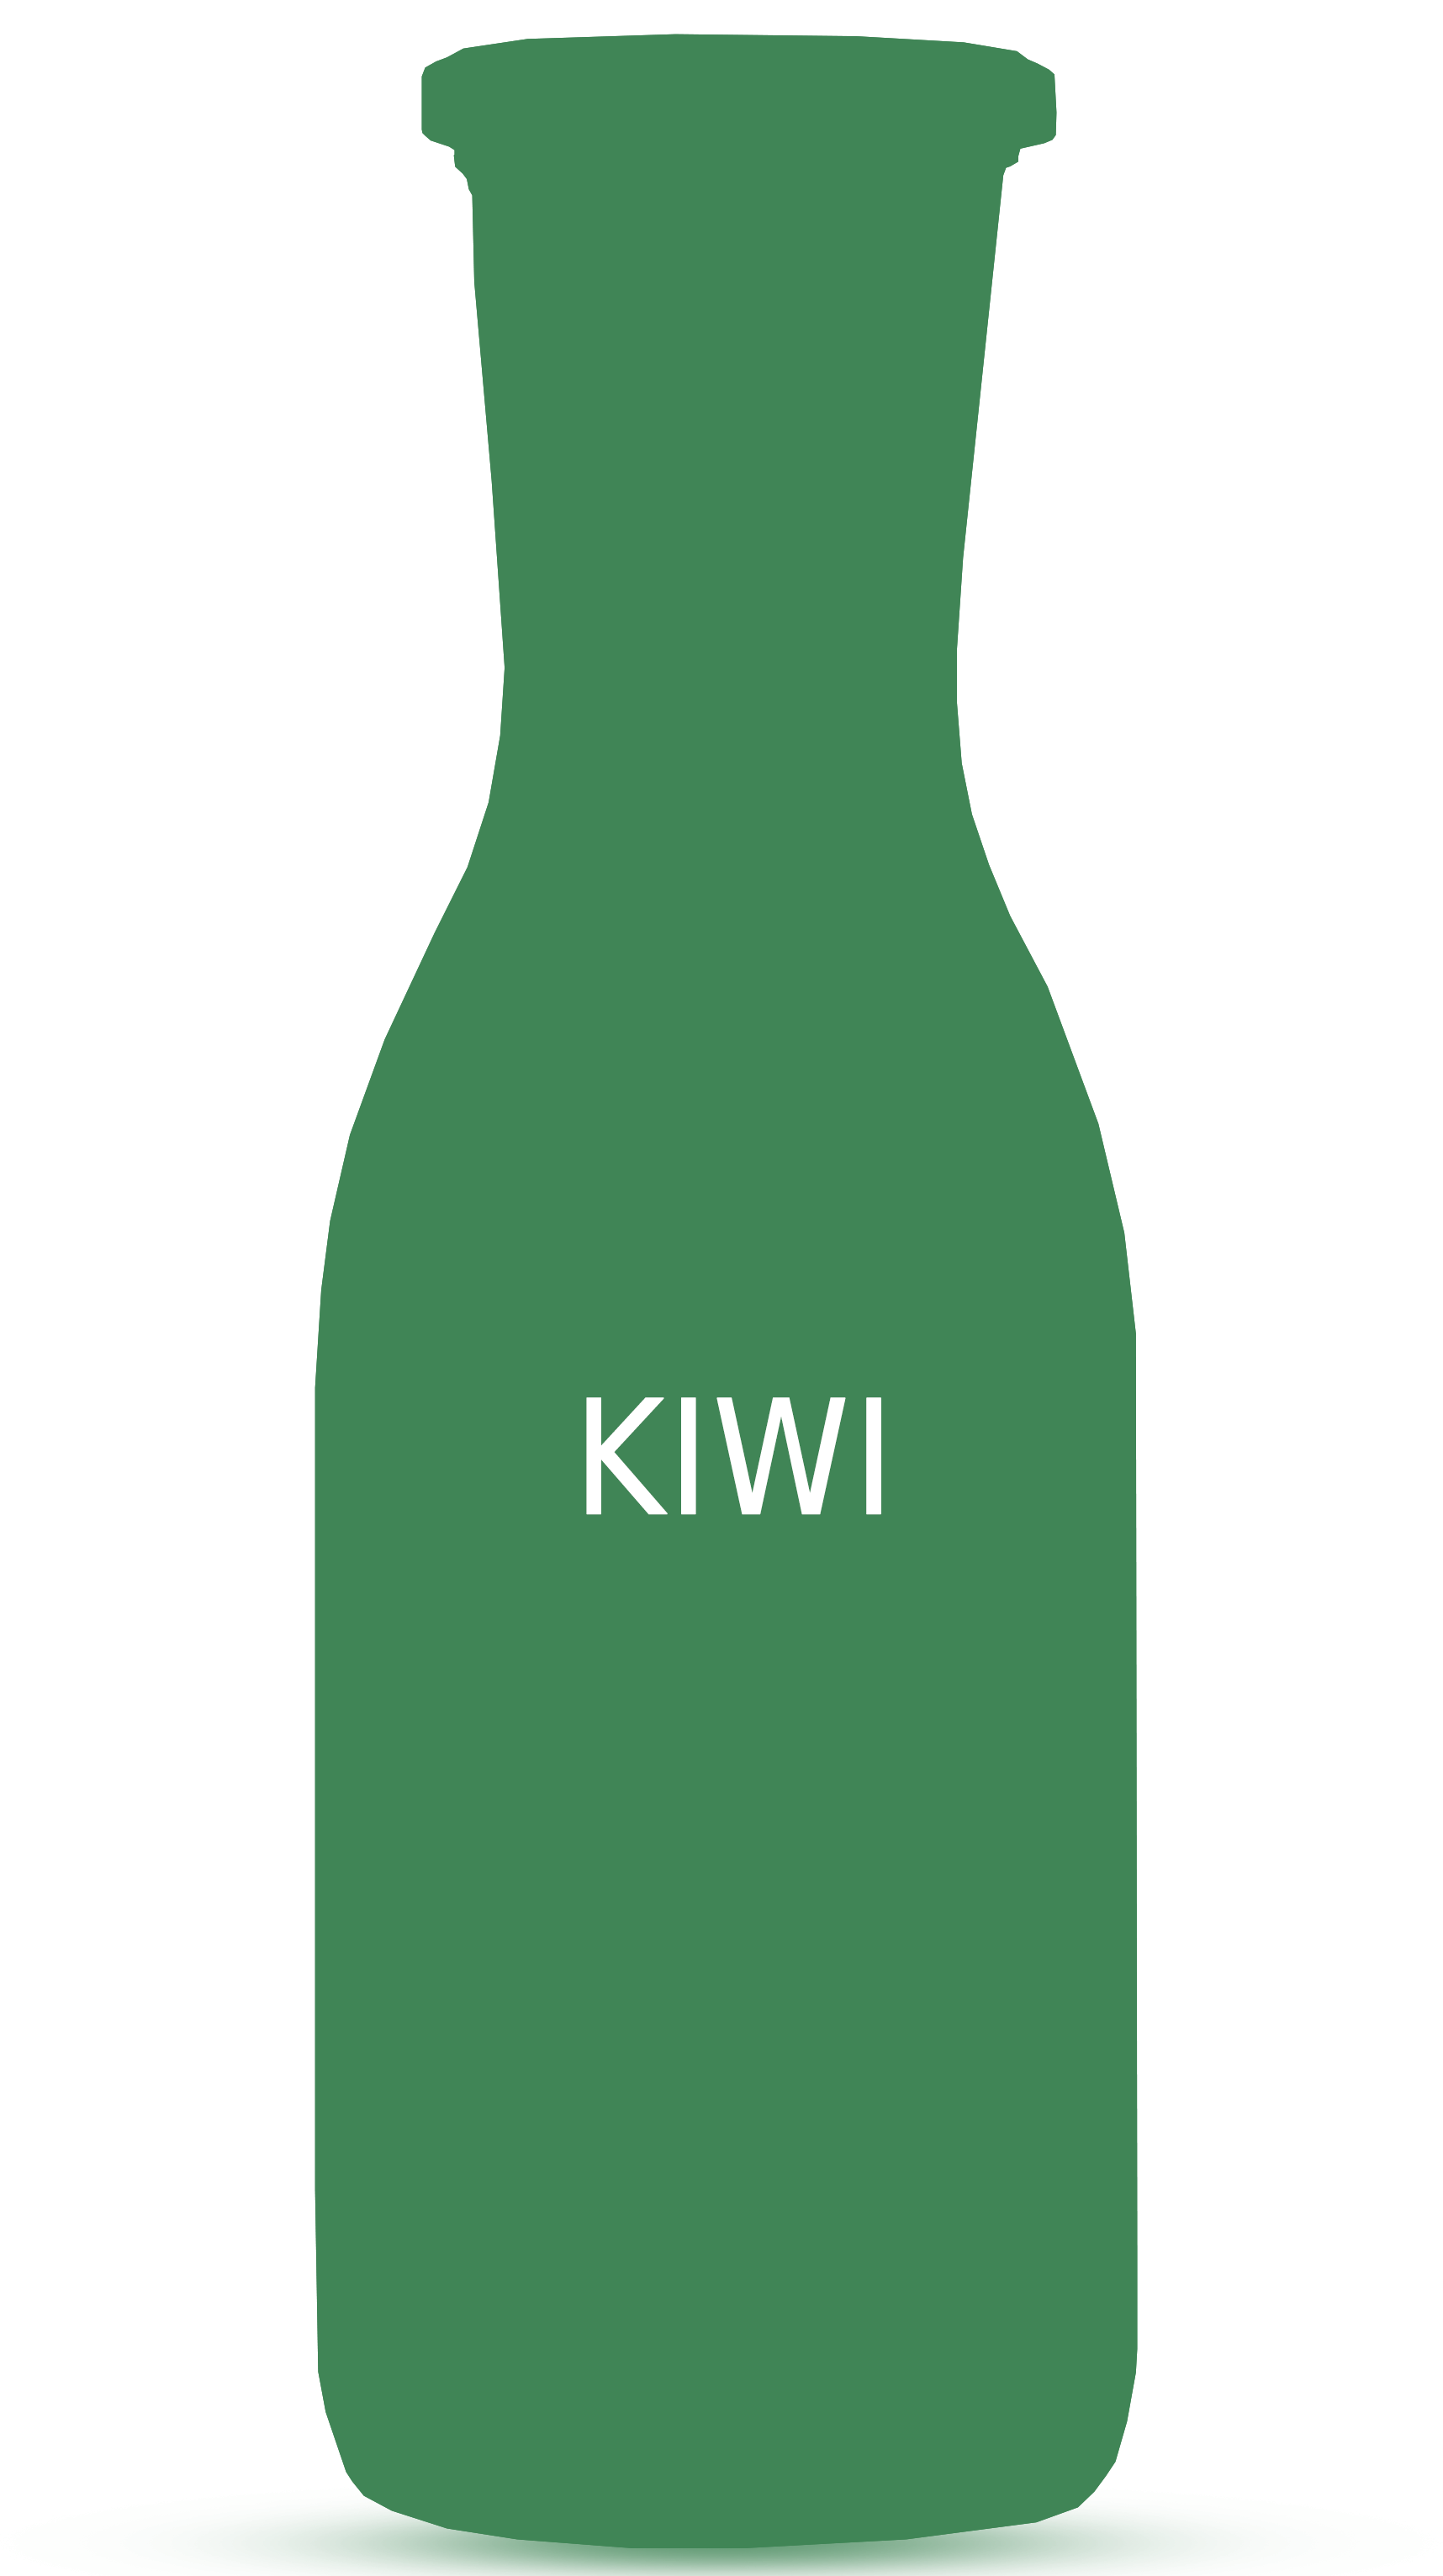 Kiwi compote